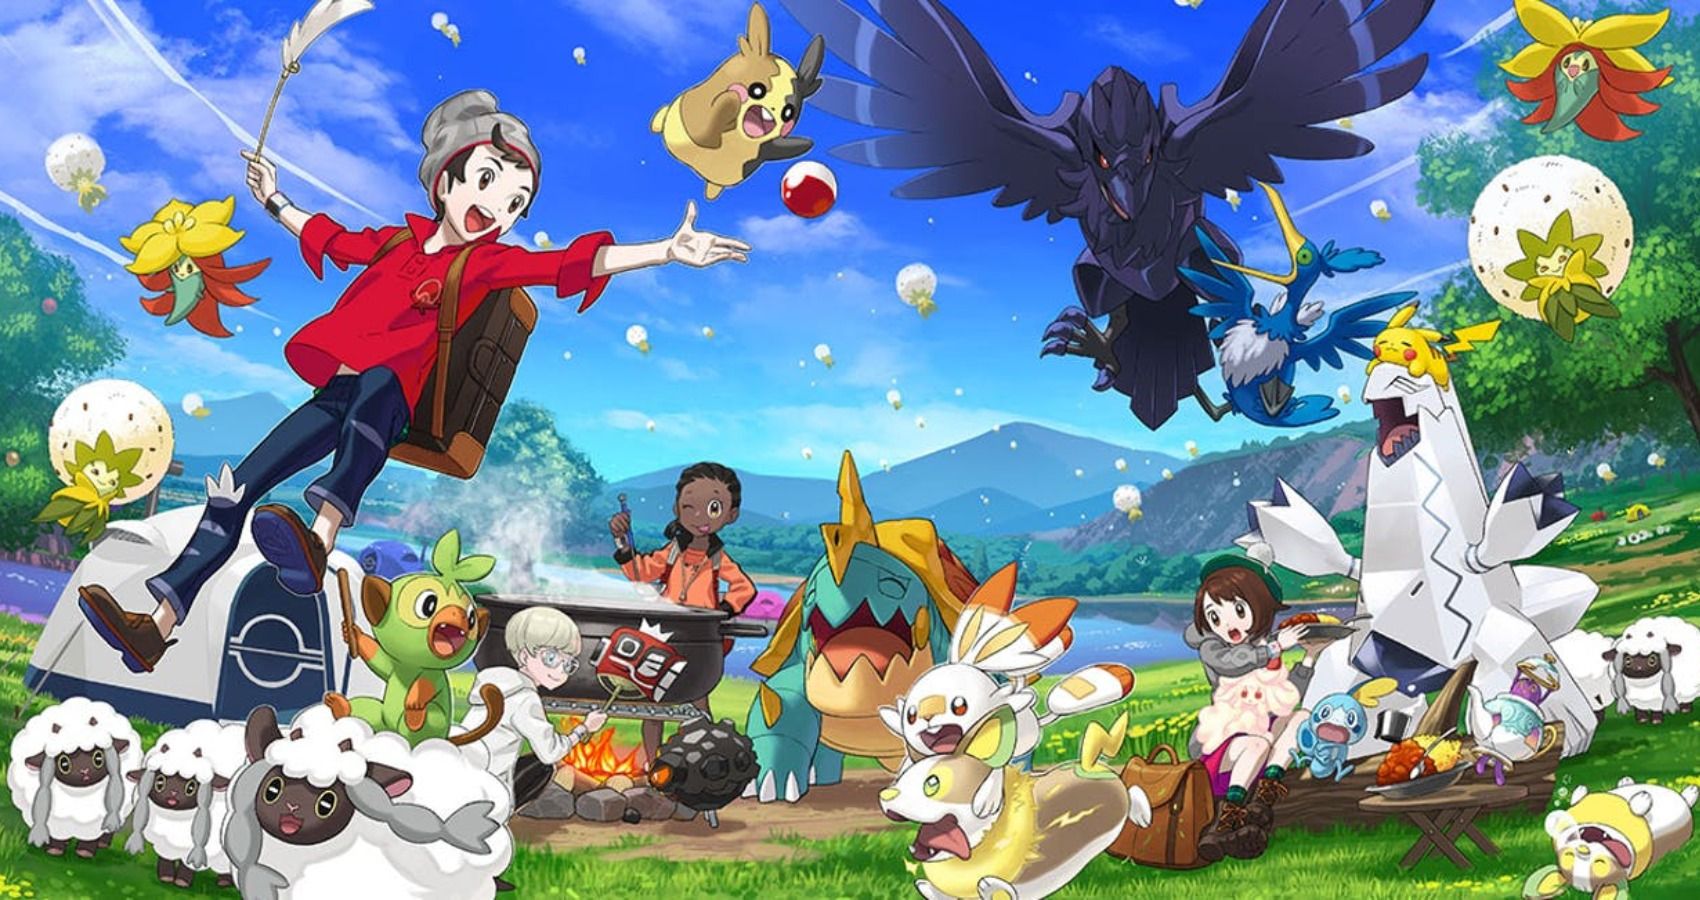 Will The Full Pokédex Ever Return In A Future Mainline Pokémon Game